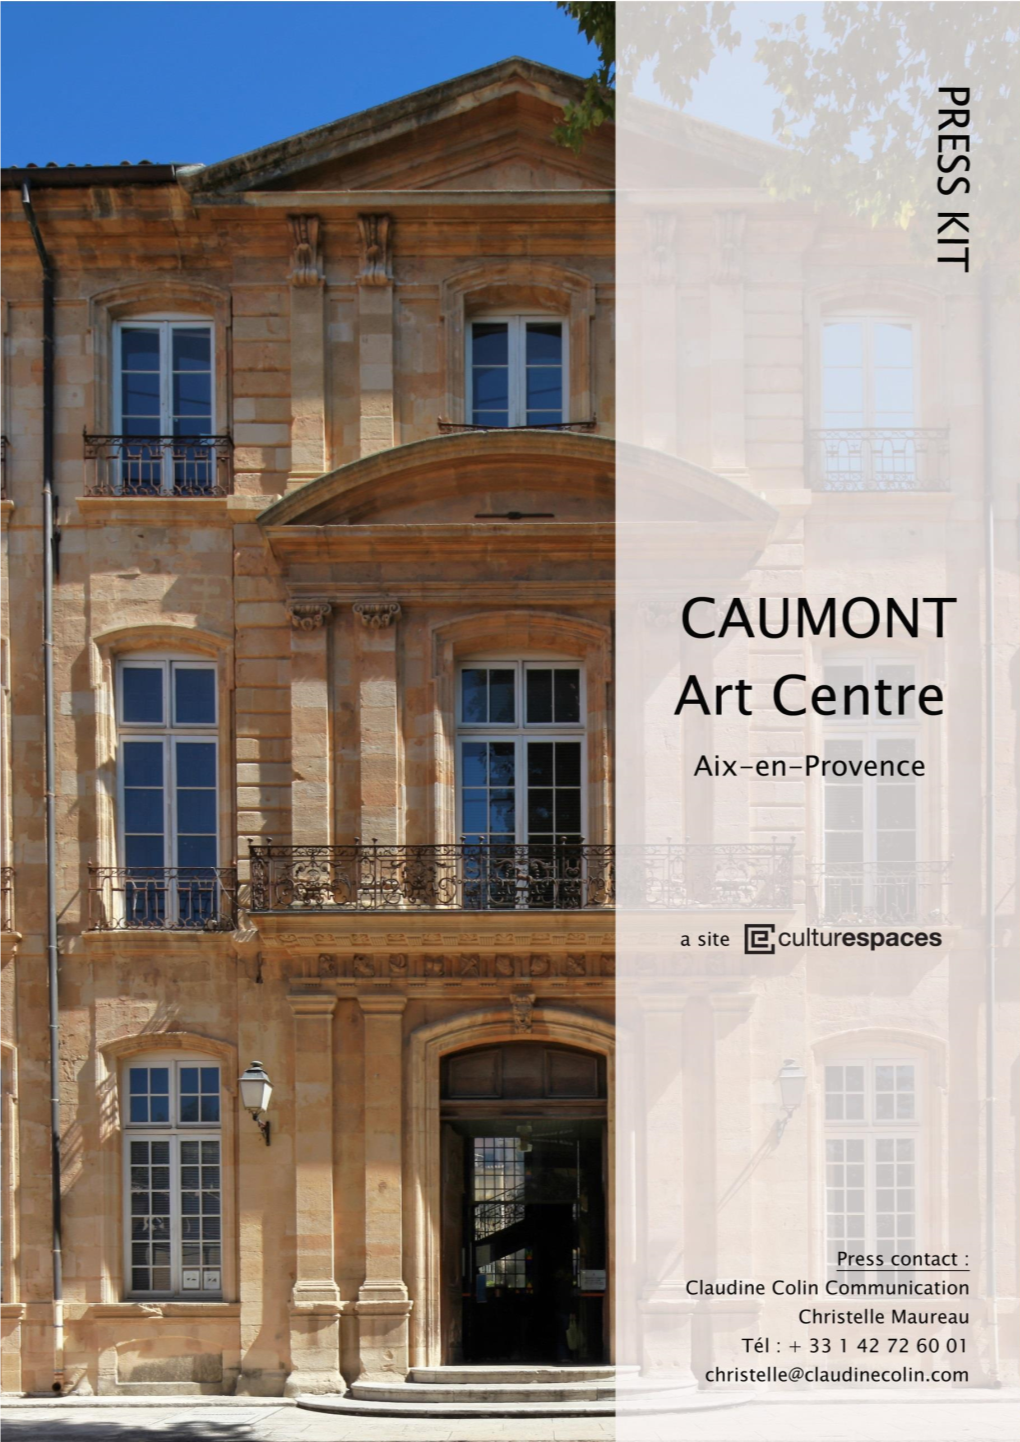 Caumont Art Centre Birth of a New Cultural